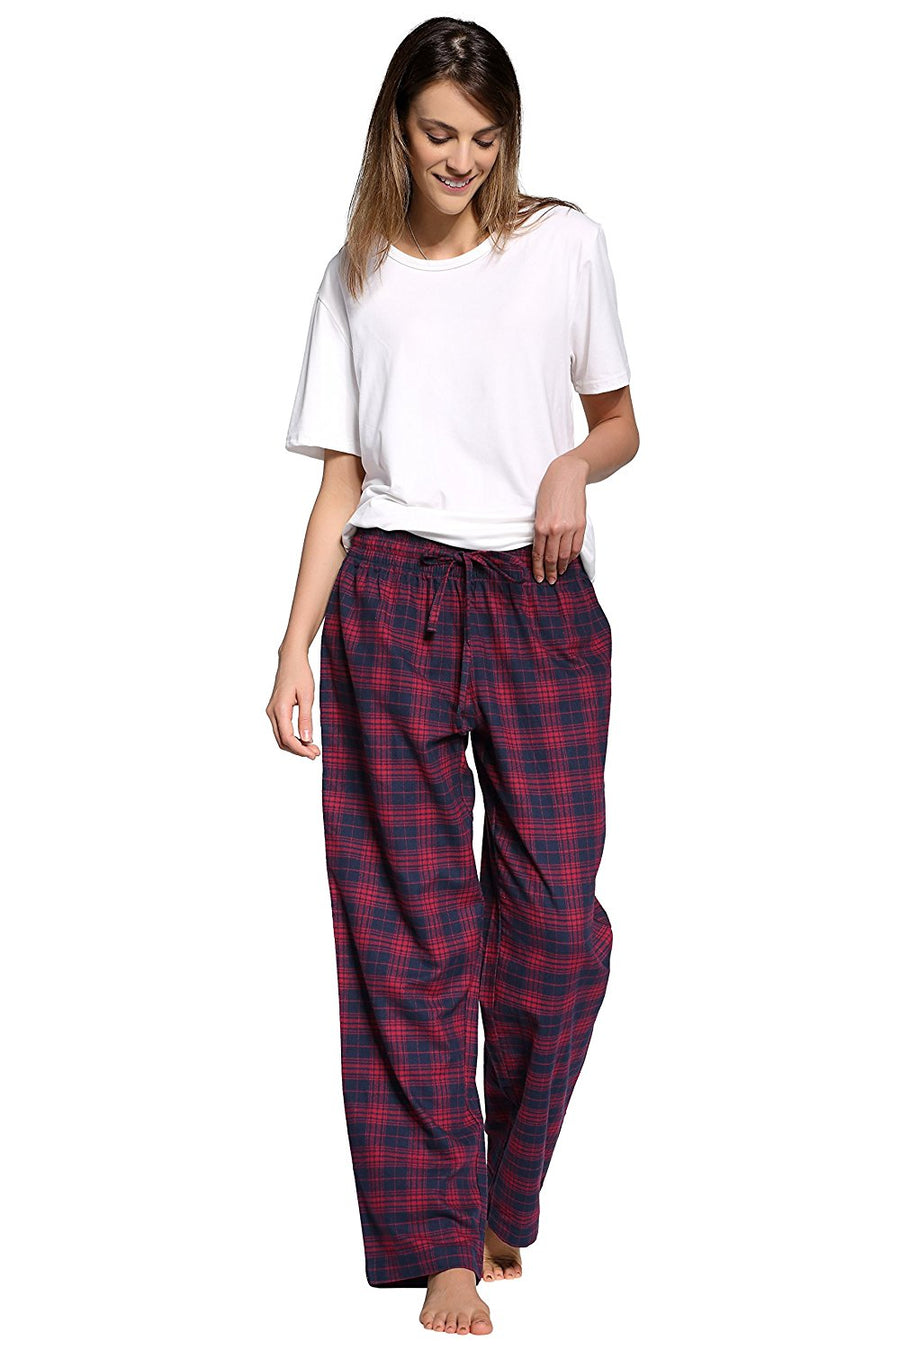 CYZ Women's 100% Cotton Super Soft Flannel Plaid Pajama/Lounge Pants, Green  Plaid, Large : : Clothing, Shoes & Accessories